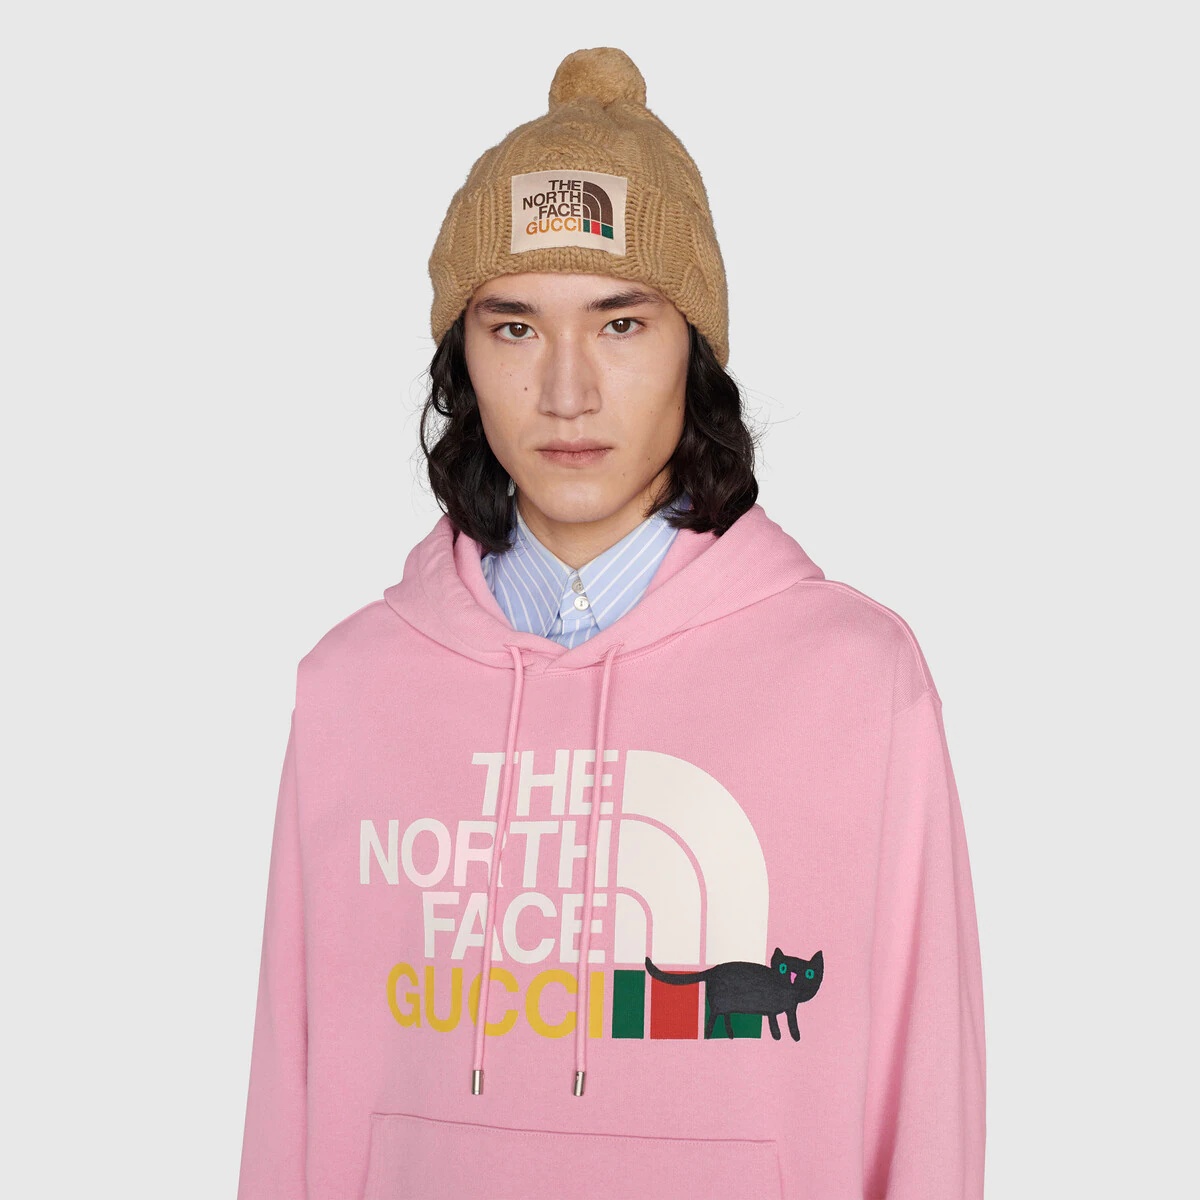 The North Face x Gucci sweatshirt - 5